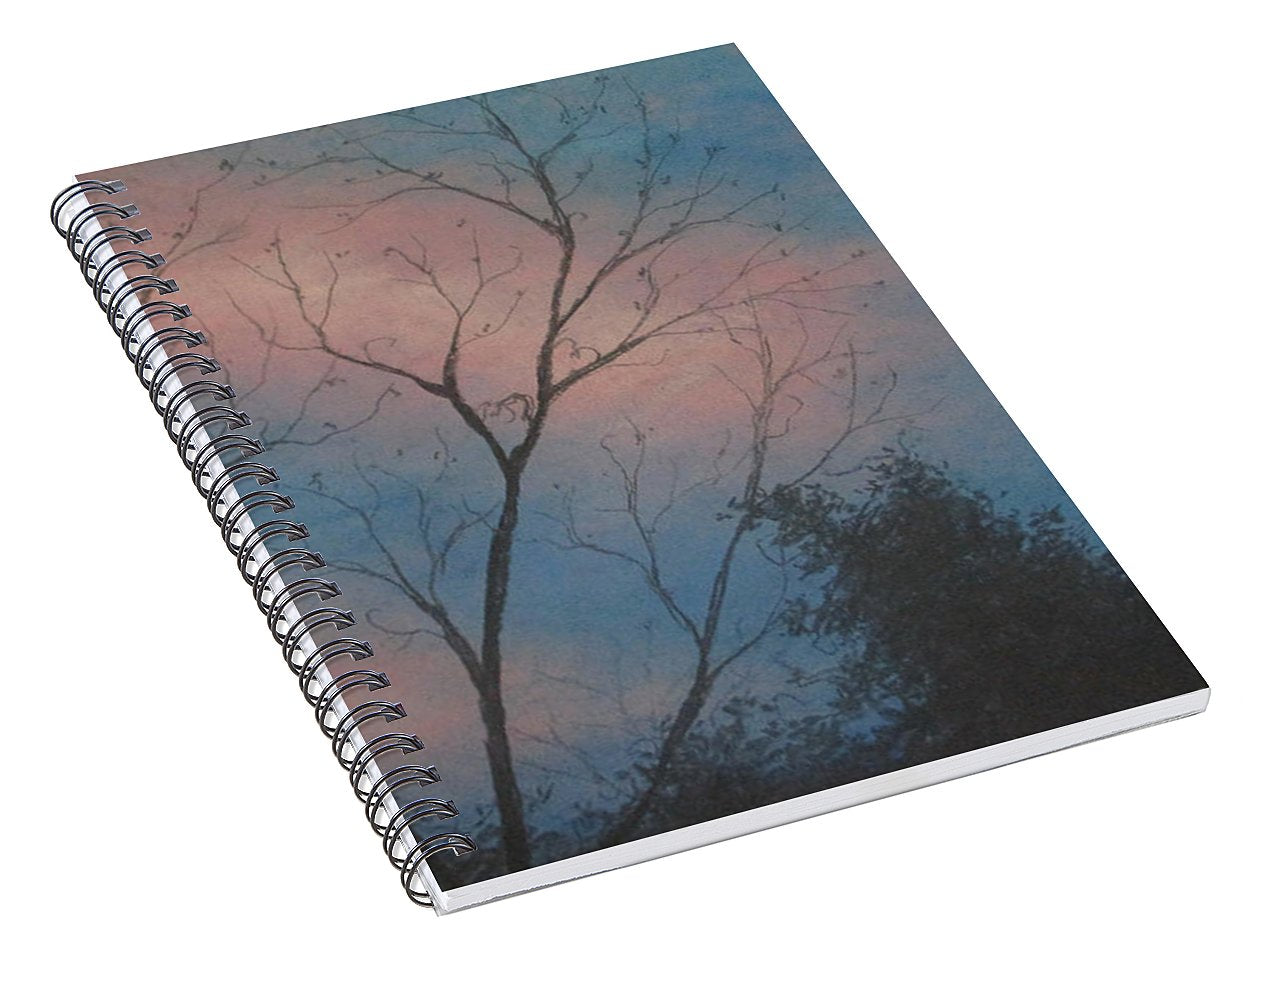 Precious Skies - Spiral Notebook